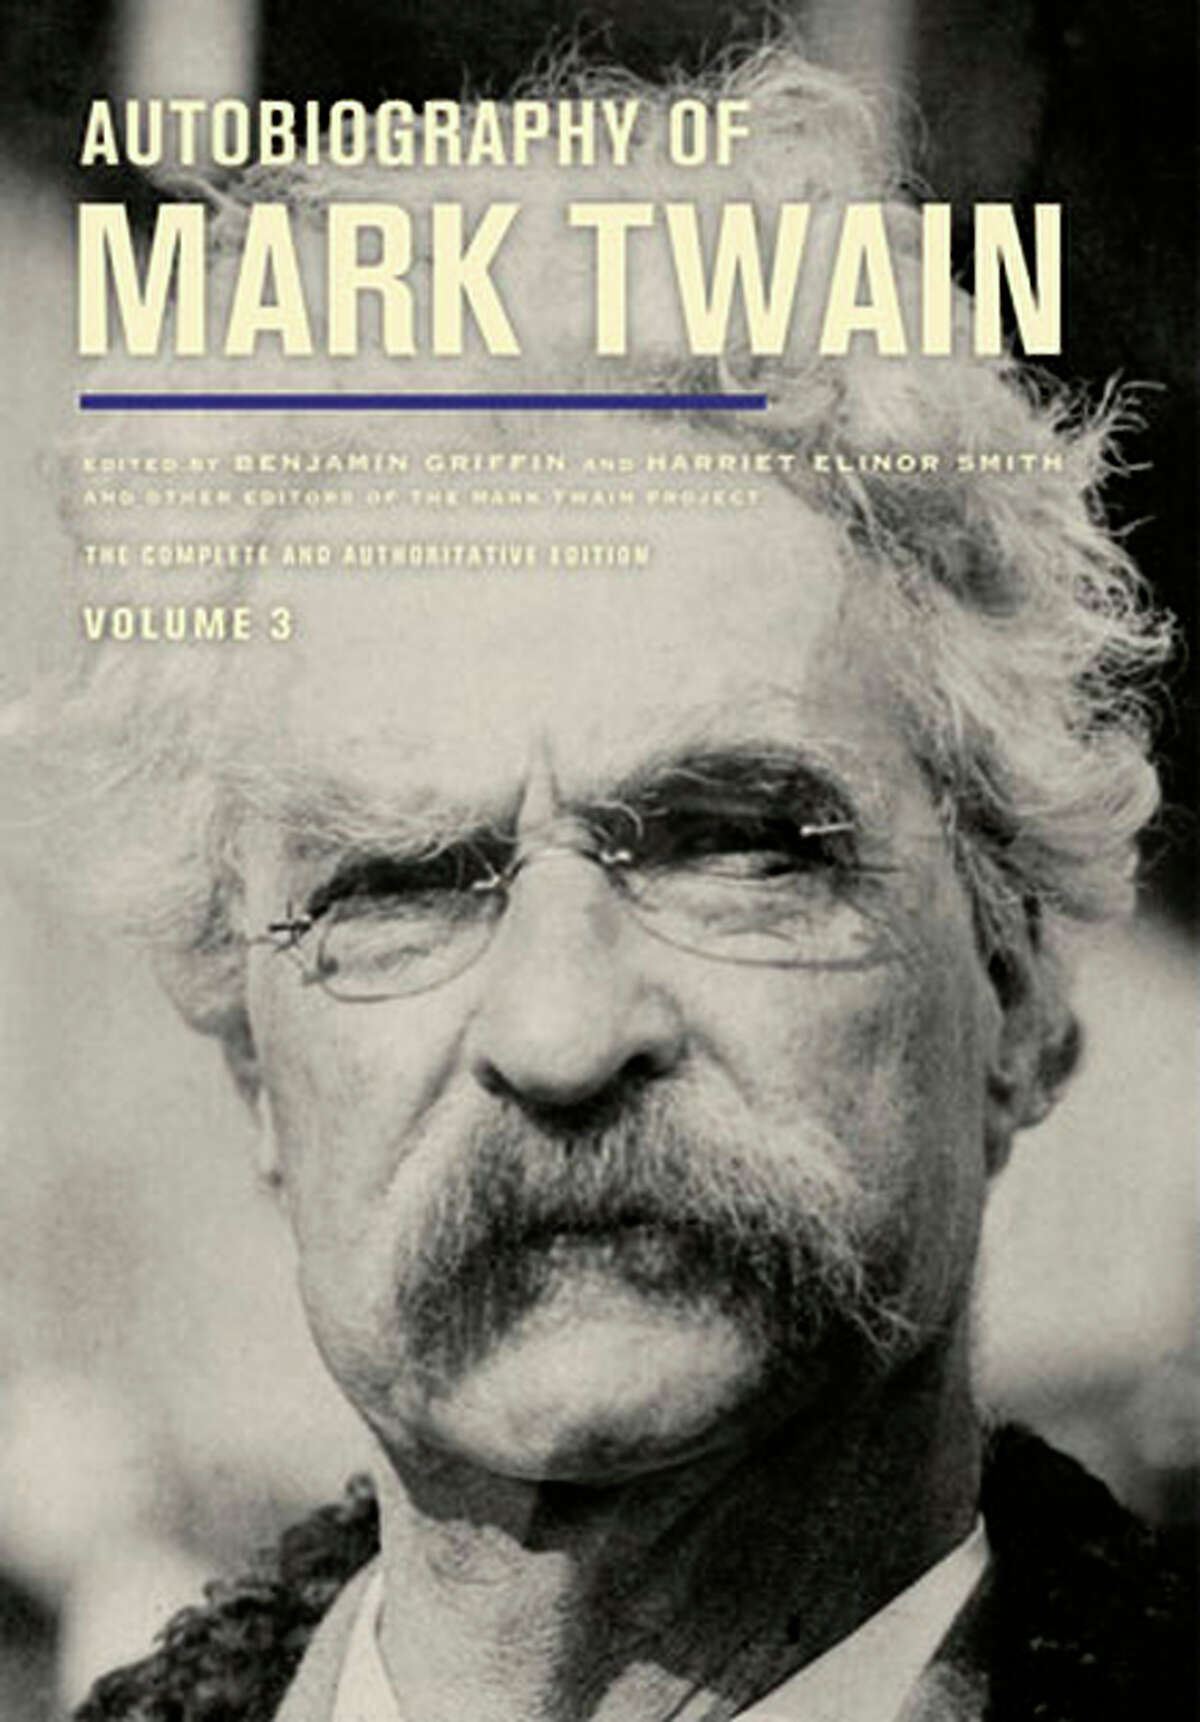 mark twain biography.com